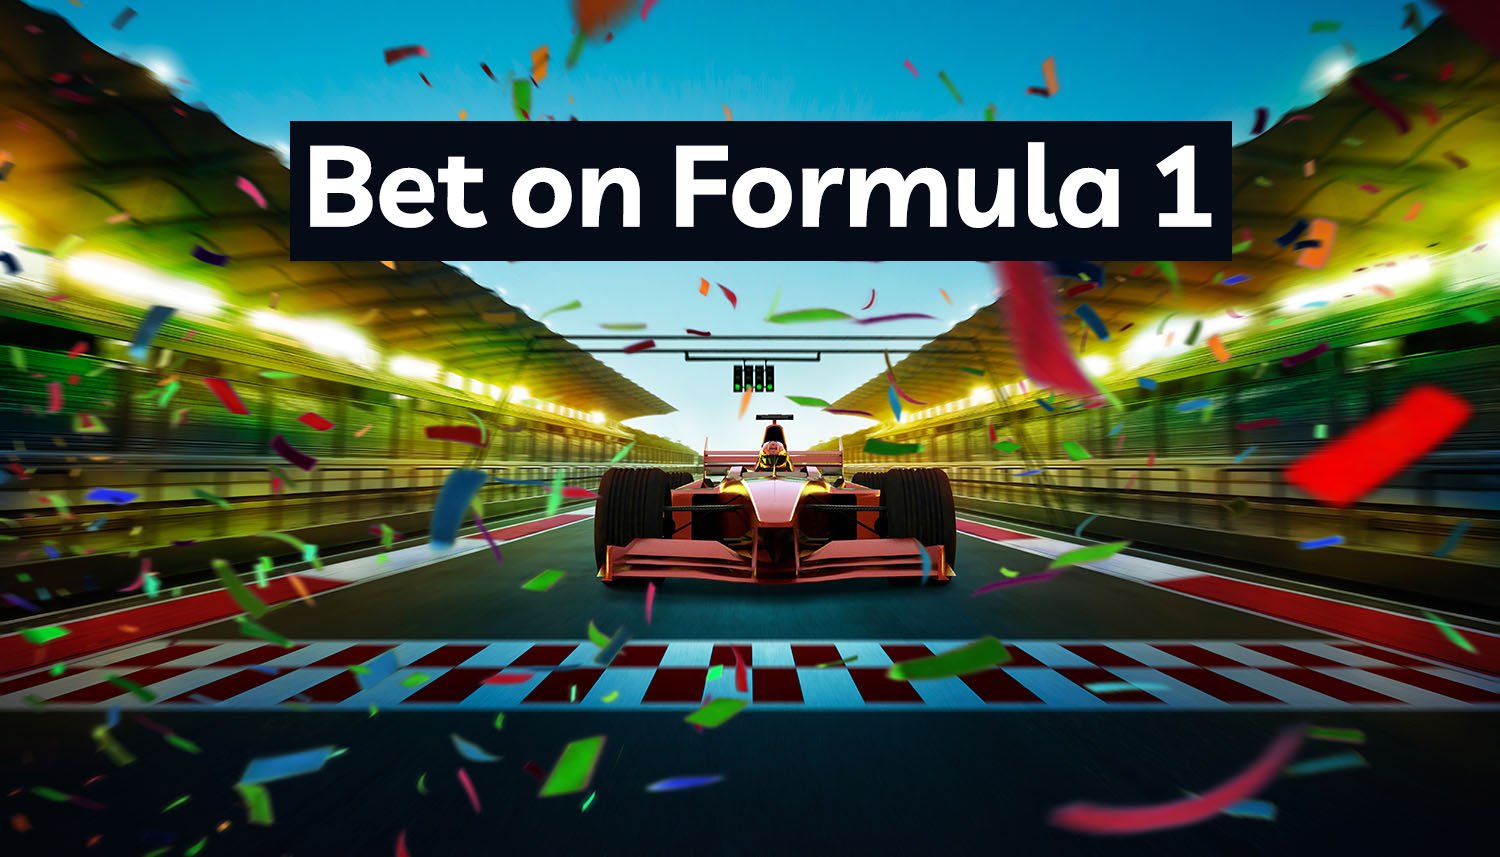 Bet on Formula 1